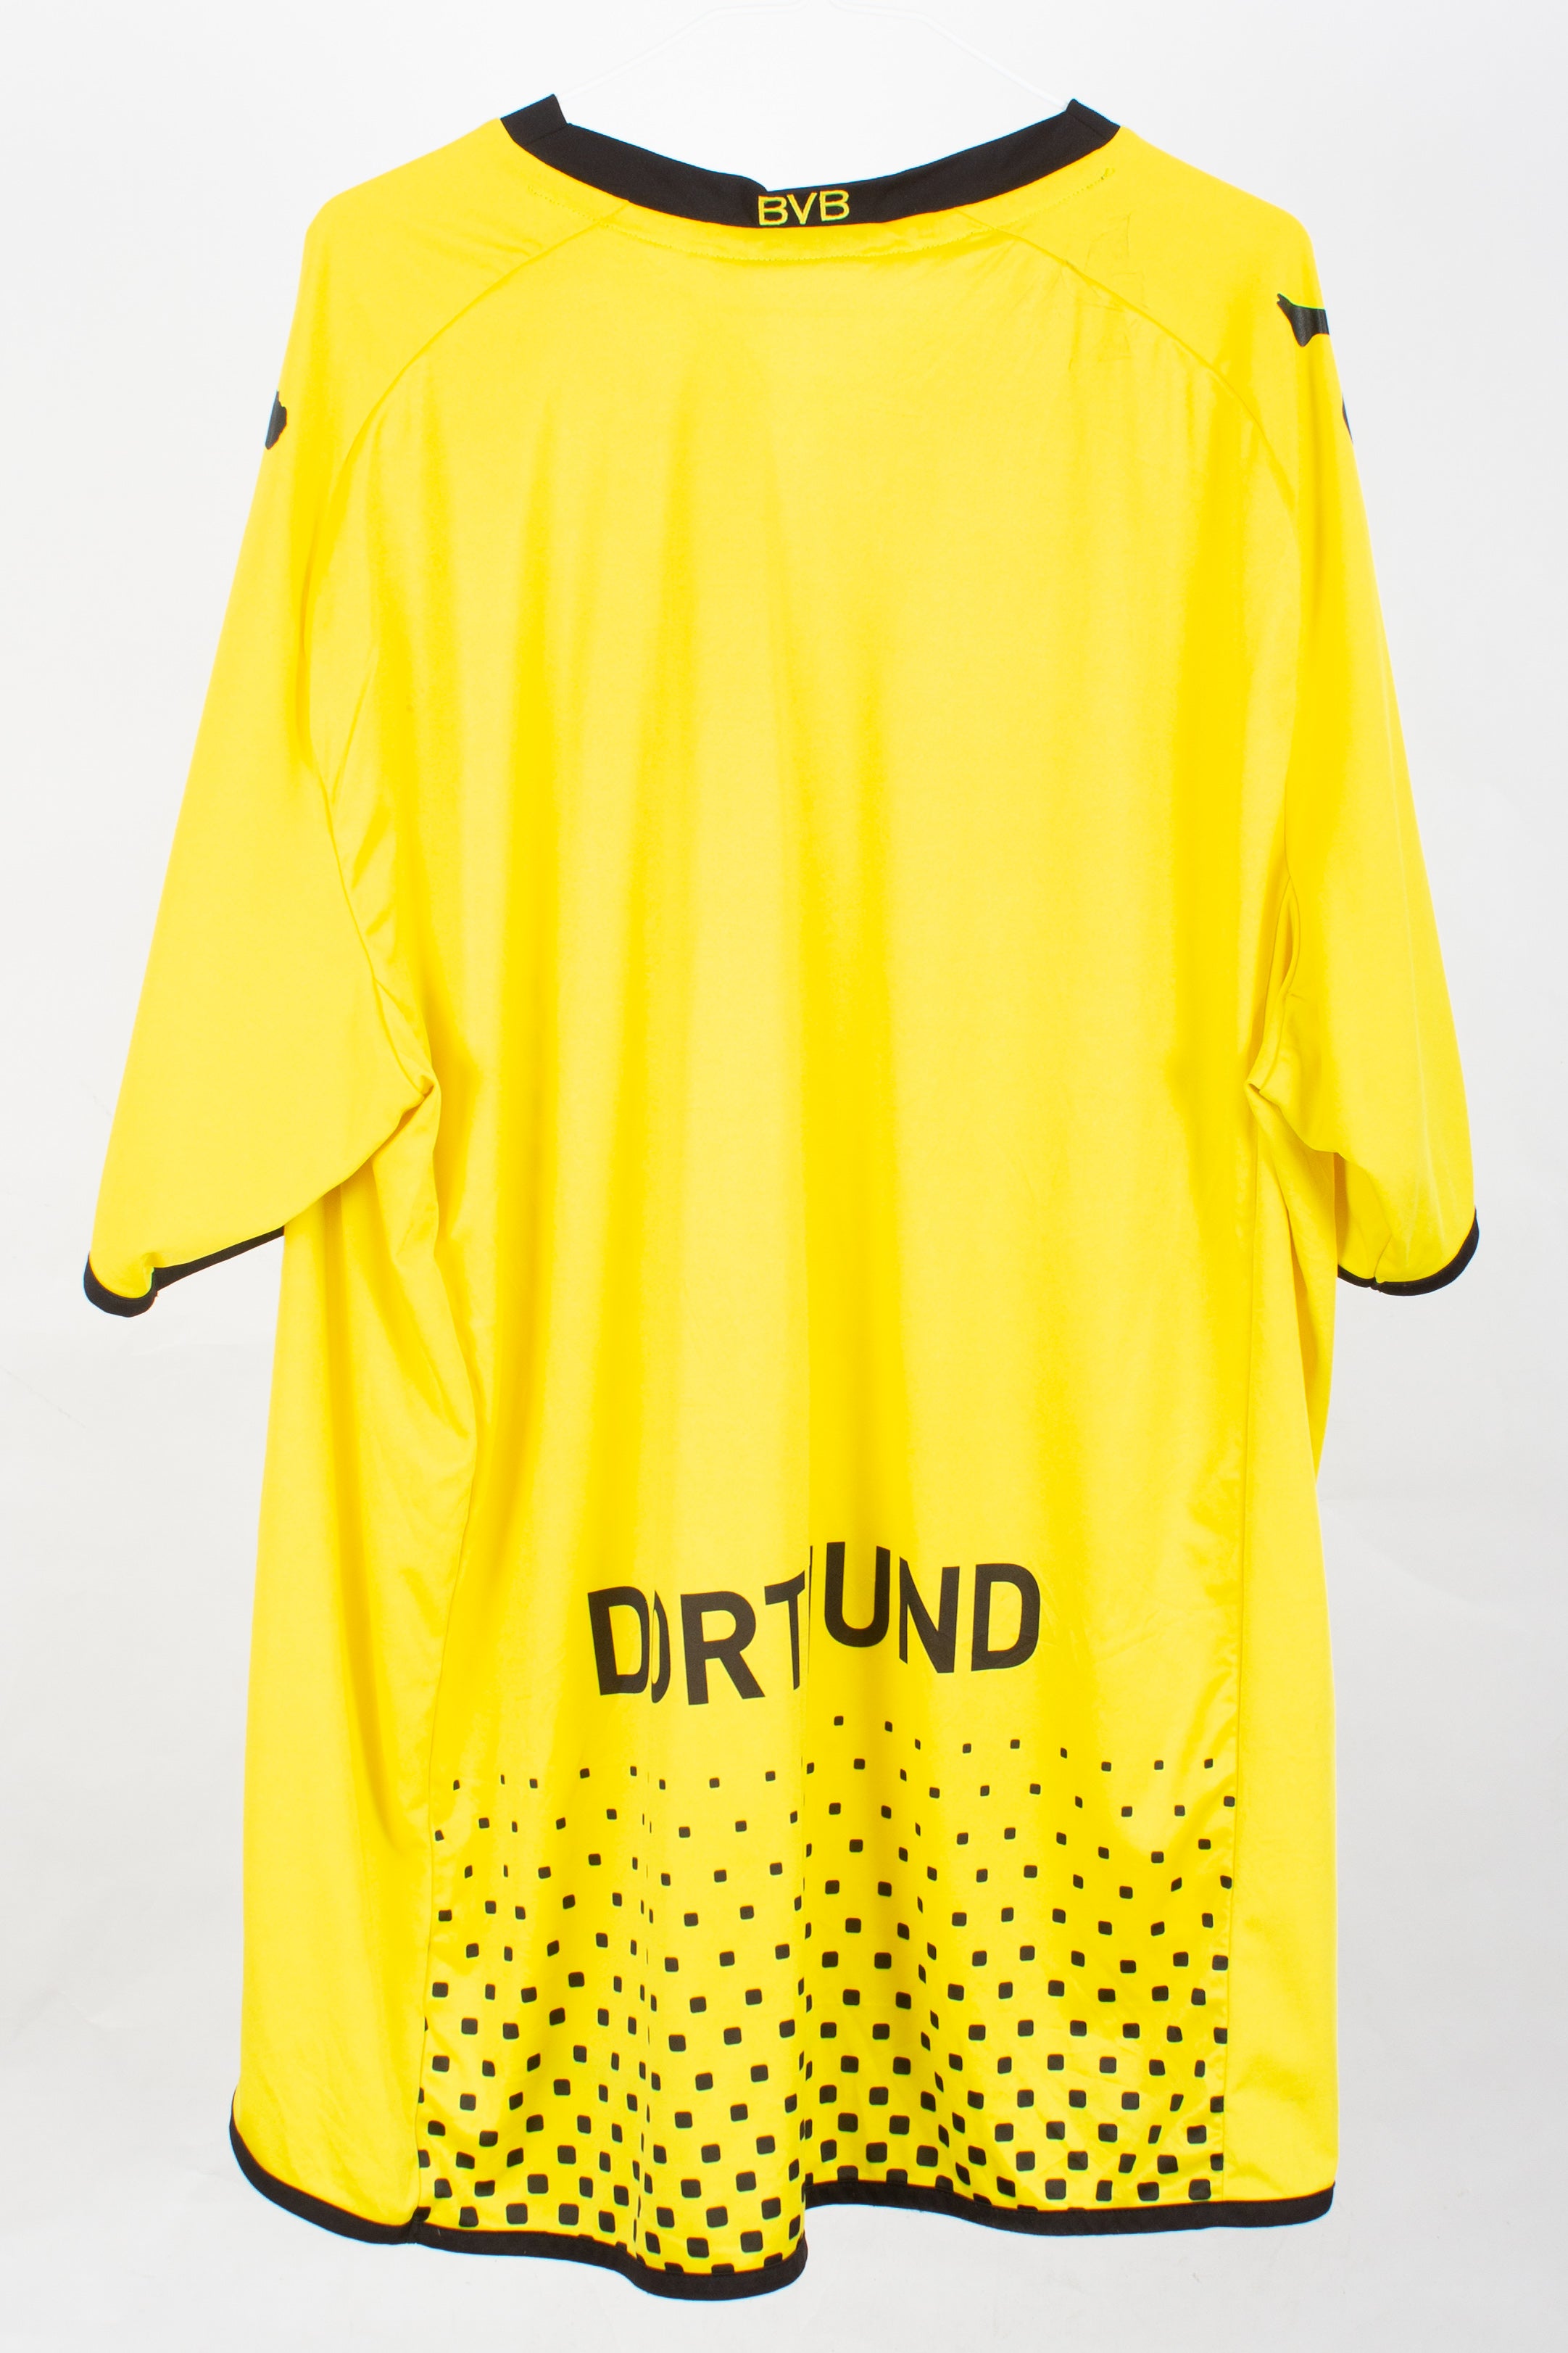 Borussia Dortmund 2011/12 Home Shirt (XXXL)